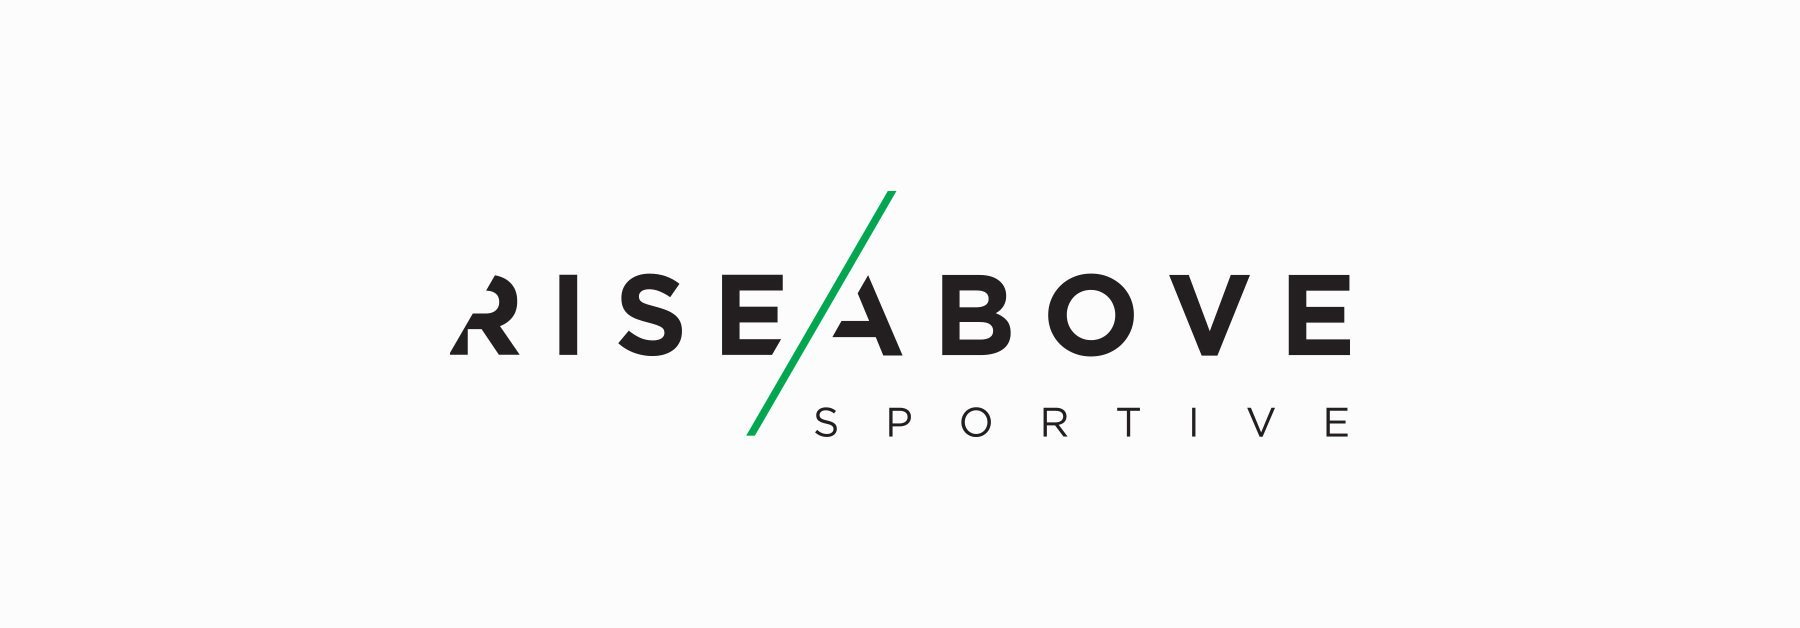 rise-above-sportive-logo